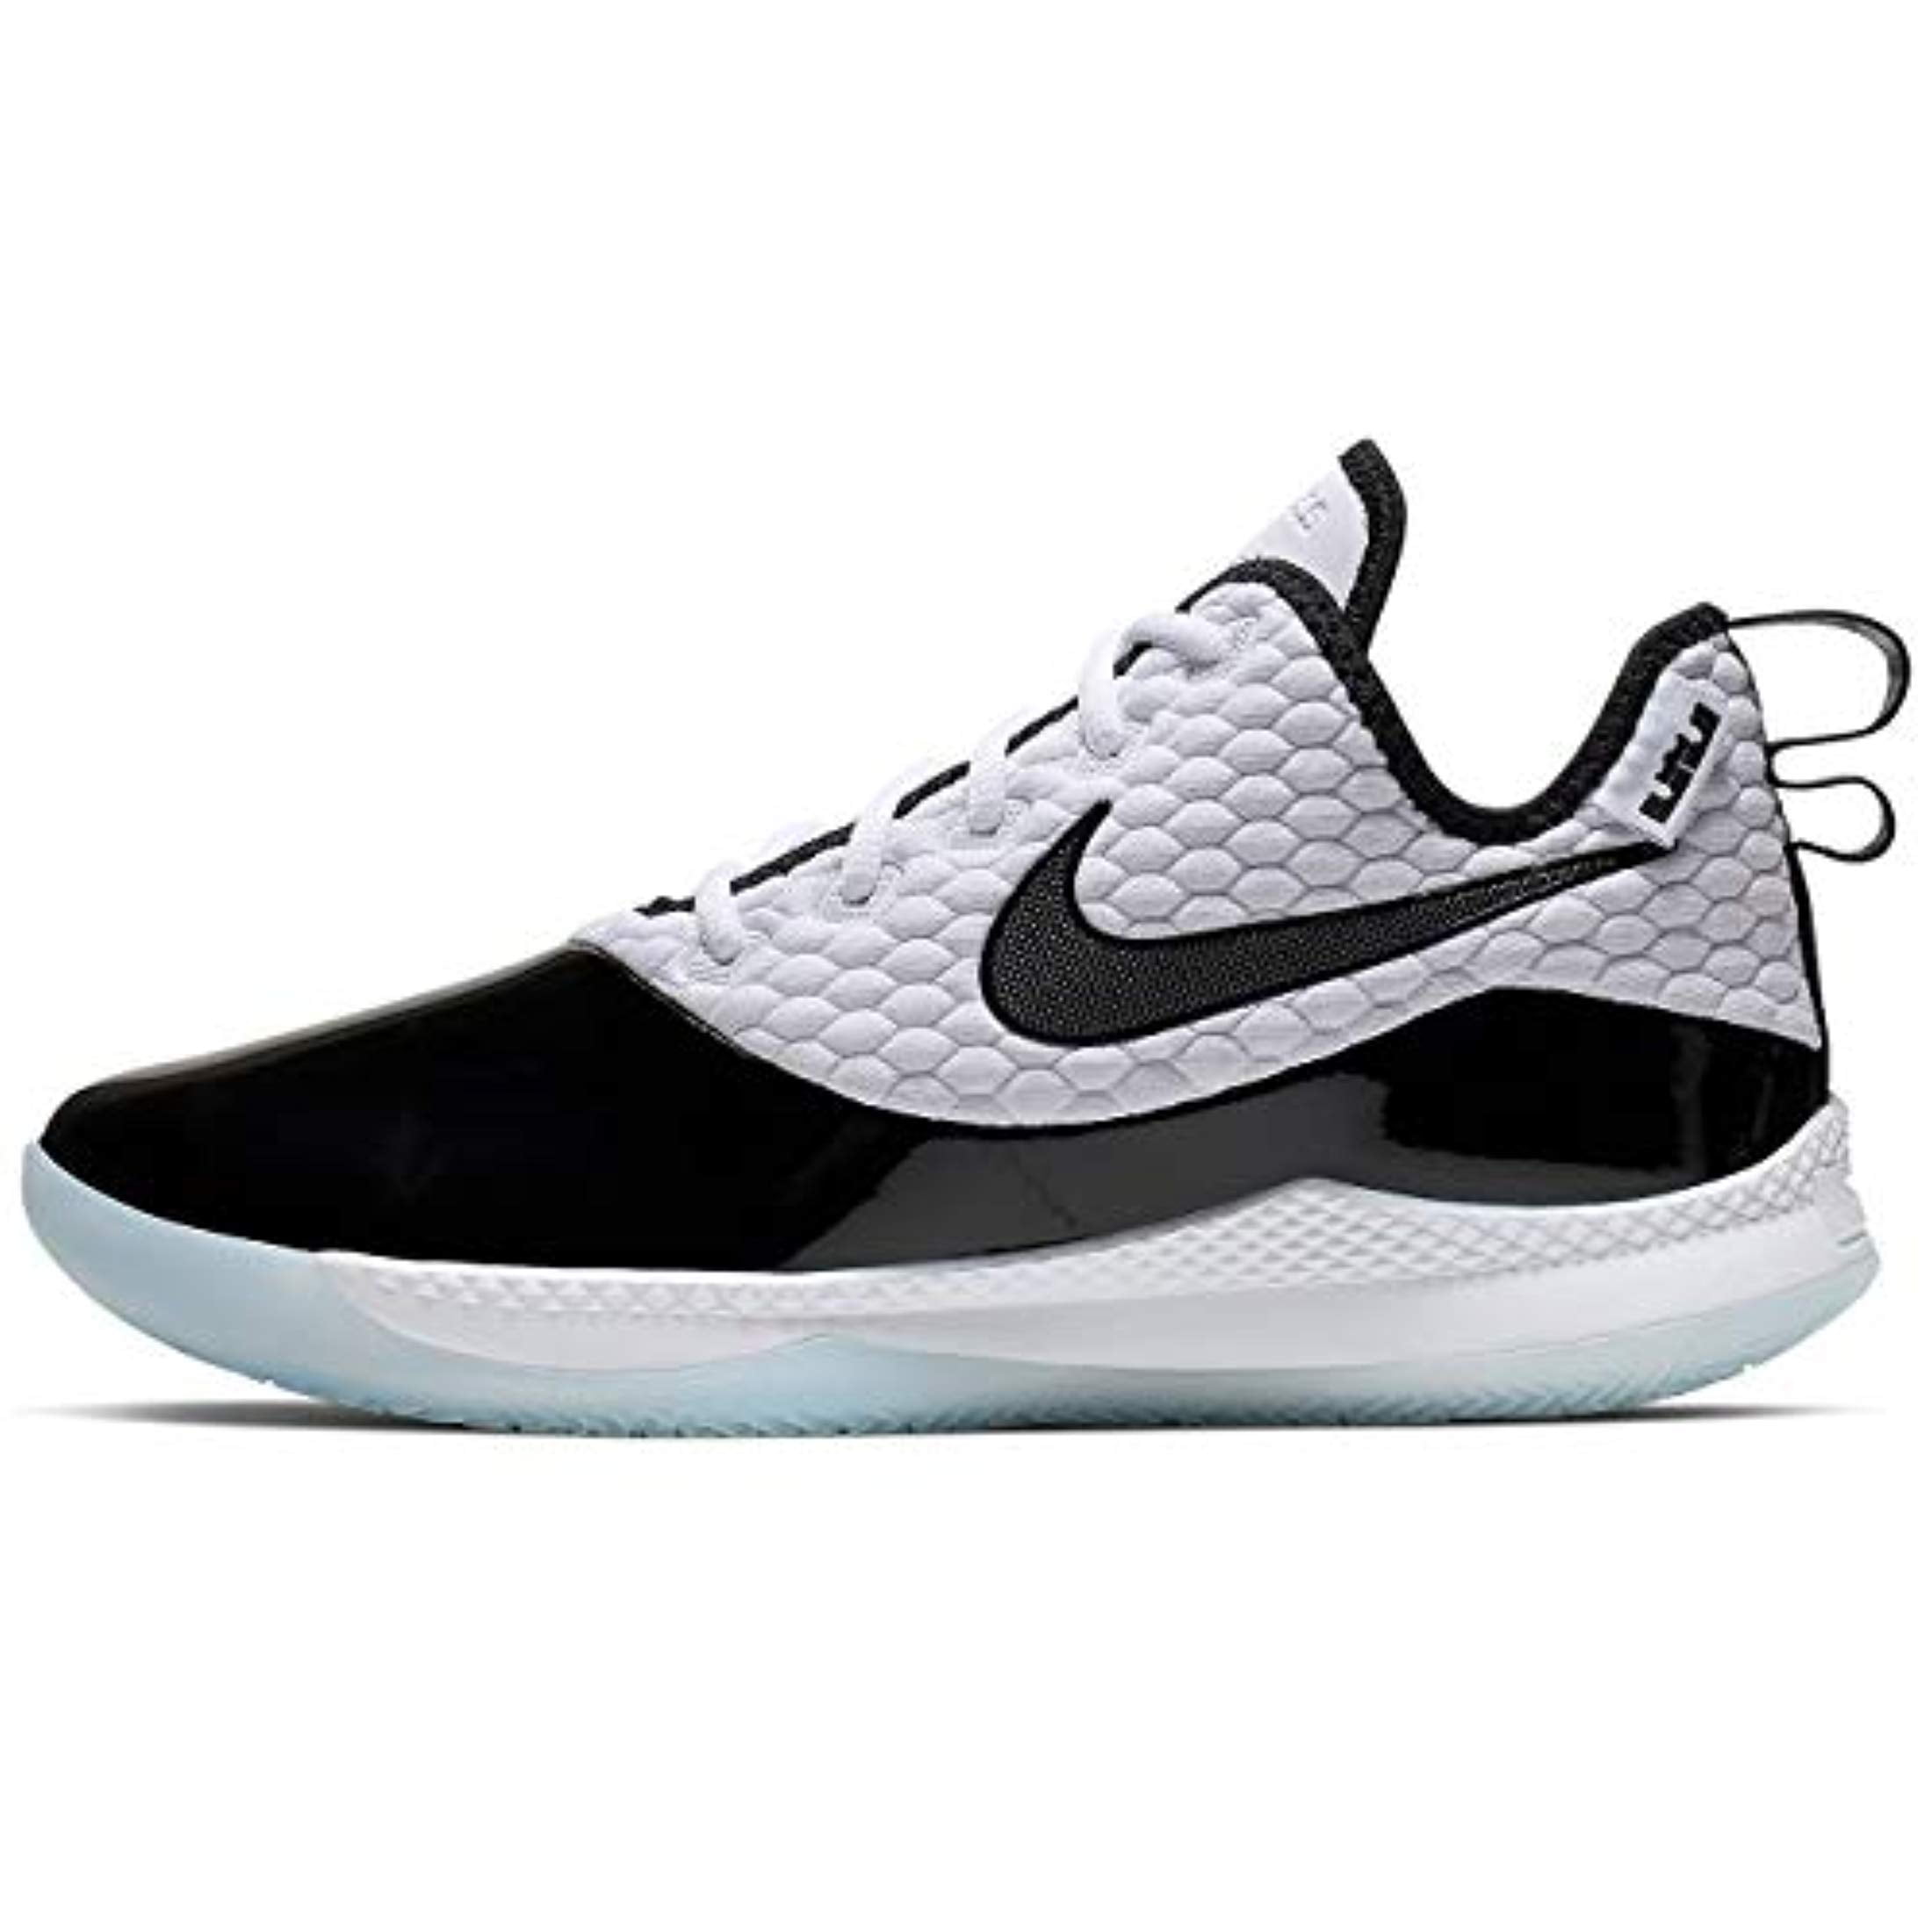 Nike Men's Lebron III Basketball Shoe White/Black/Half Blue Size 10 M US - Walmart.com